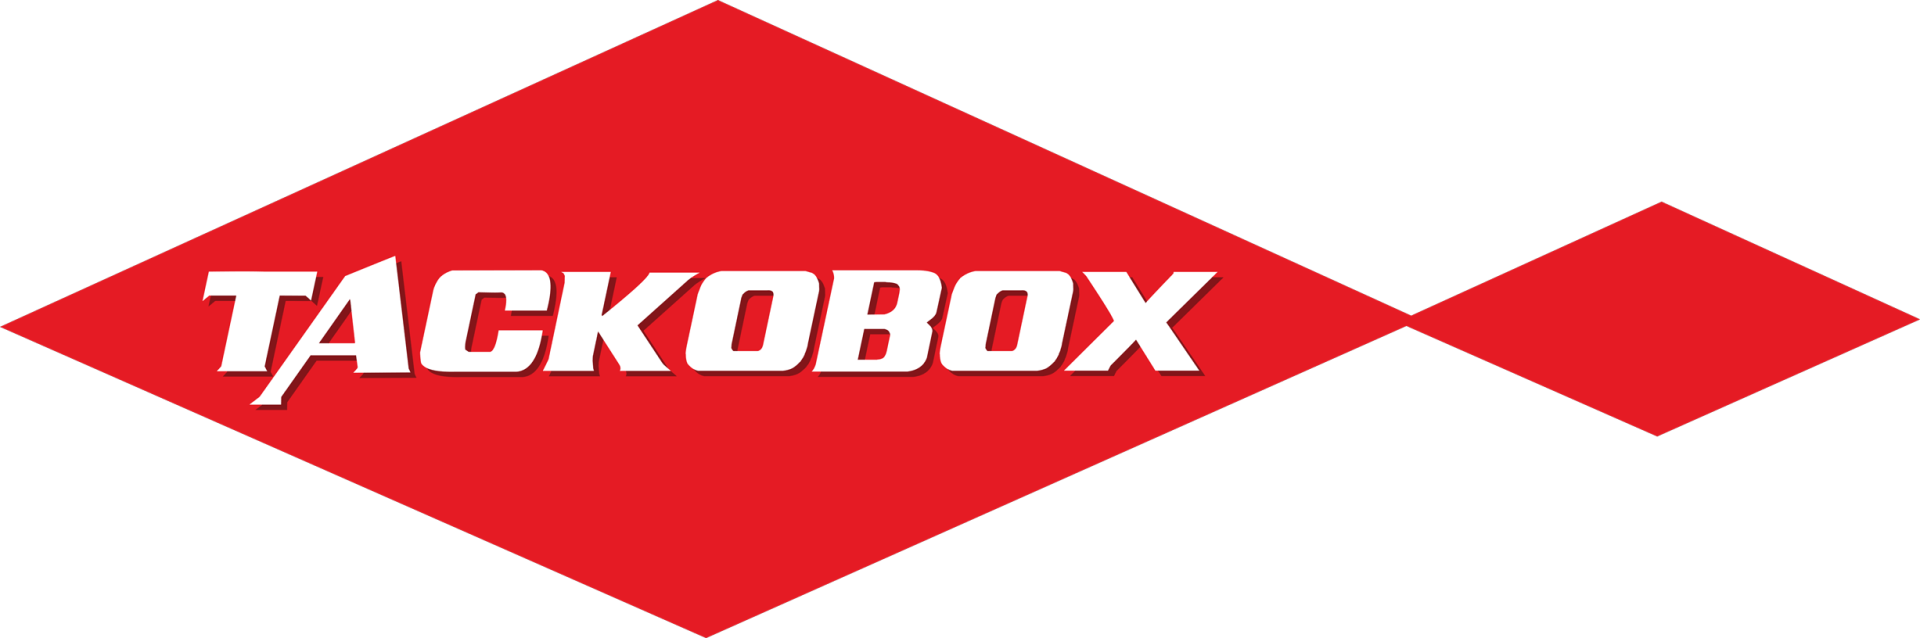 Poletap Smartrod Ease Of Use by Tackobox 